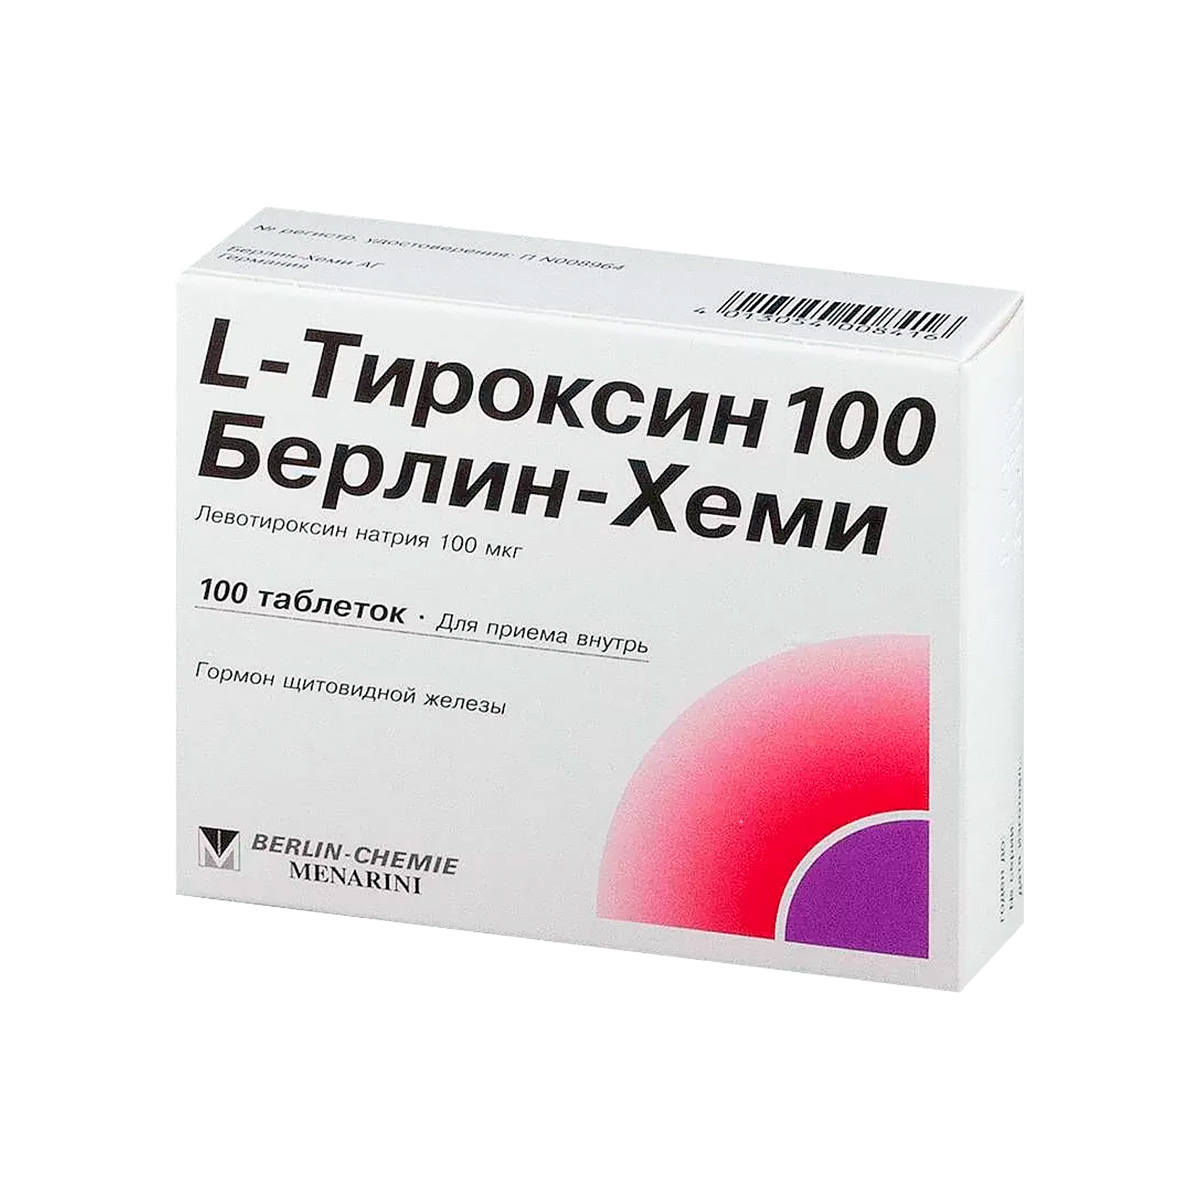 L-Тироксин 100 Берлин-Хеми 100 мкг таблетки 100 шт